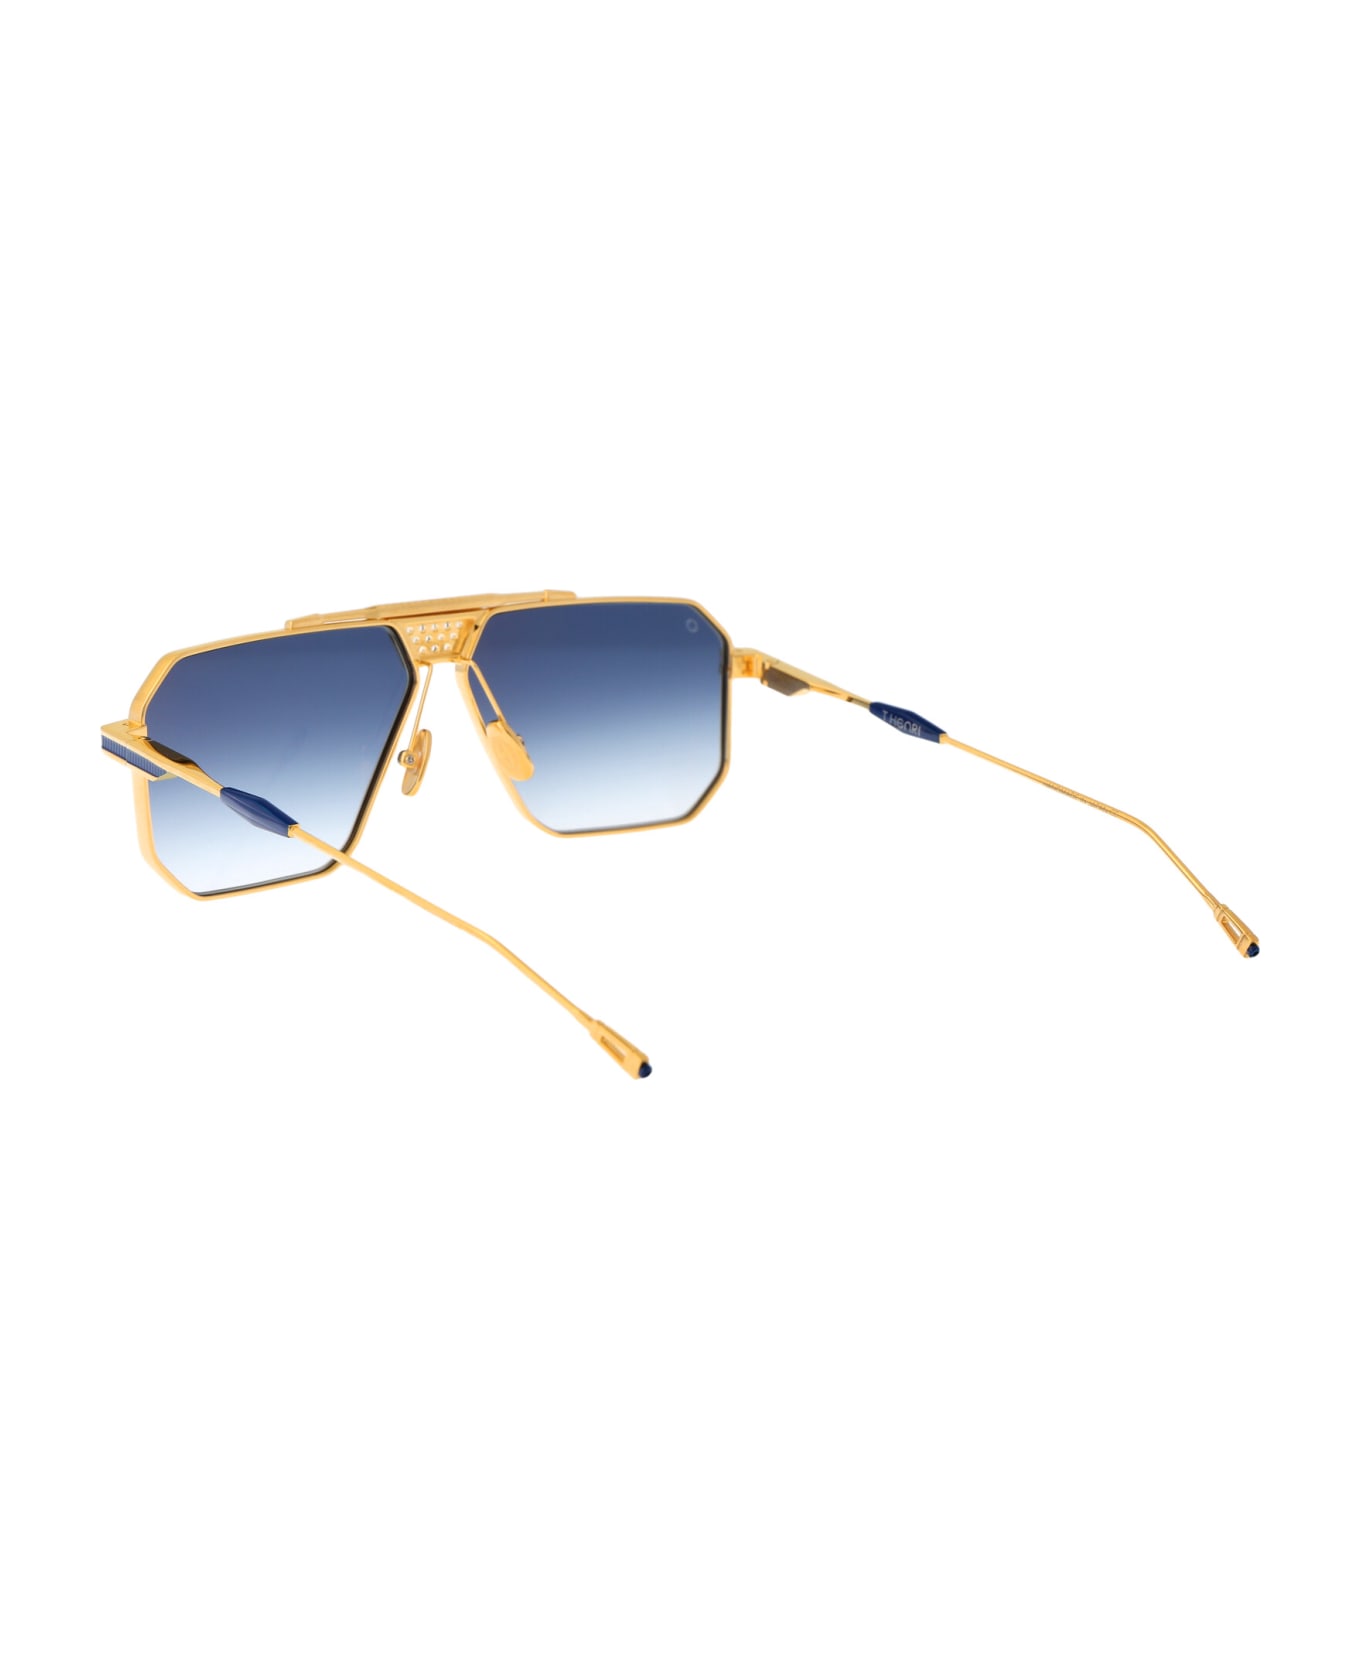 T Henri Berlinette Sunglasses - L'OR BLEU サングラス